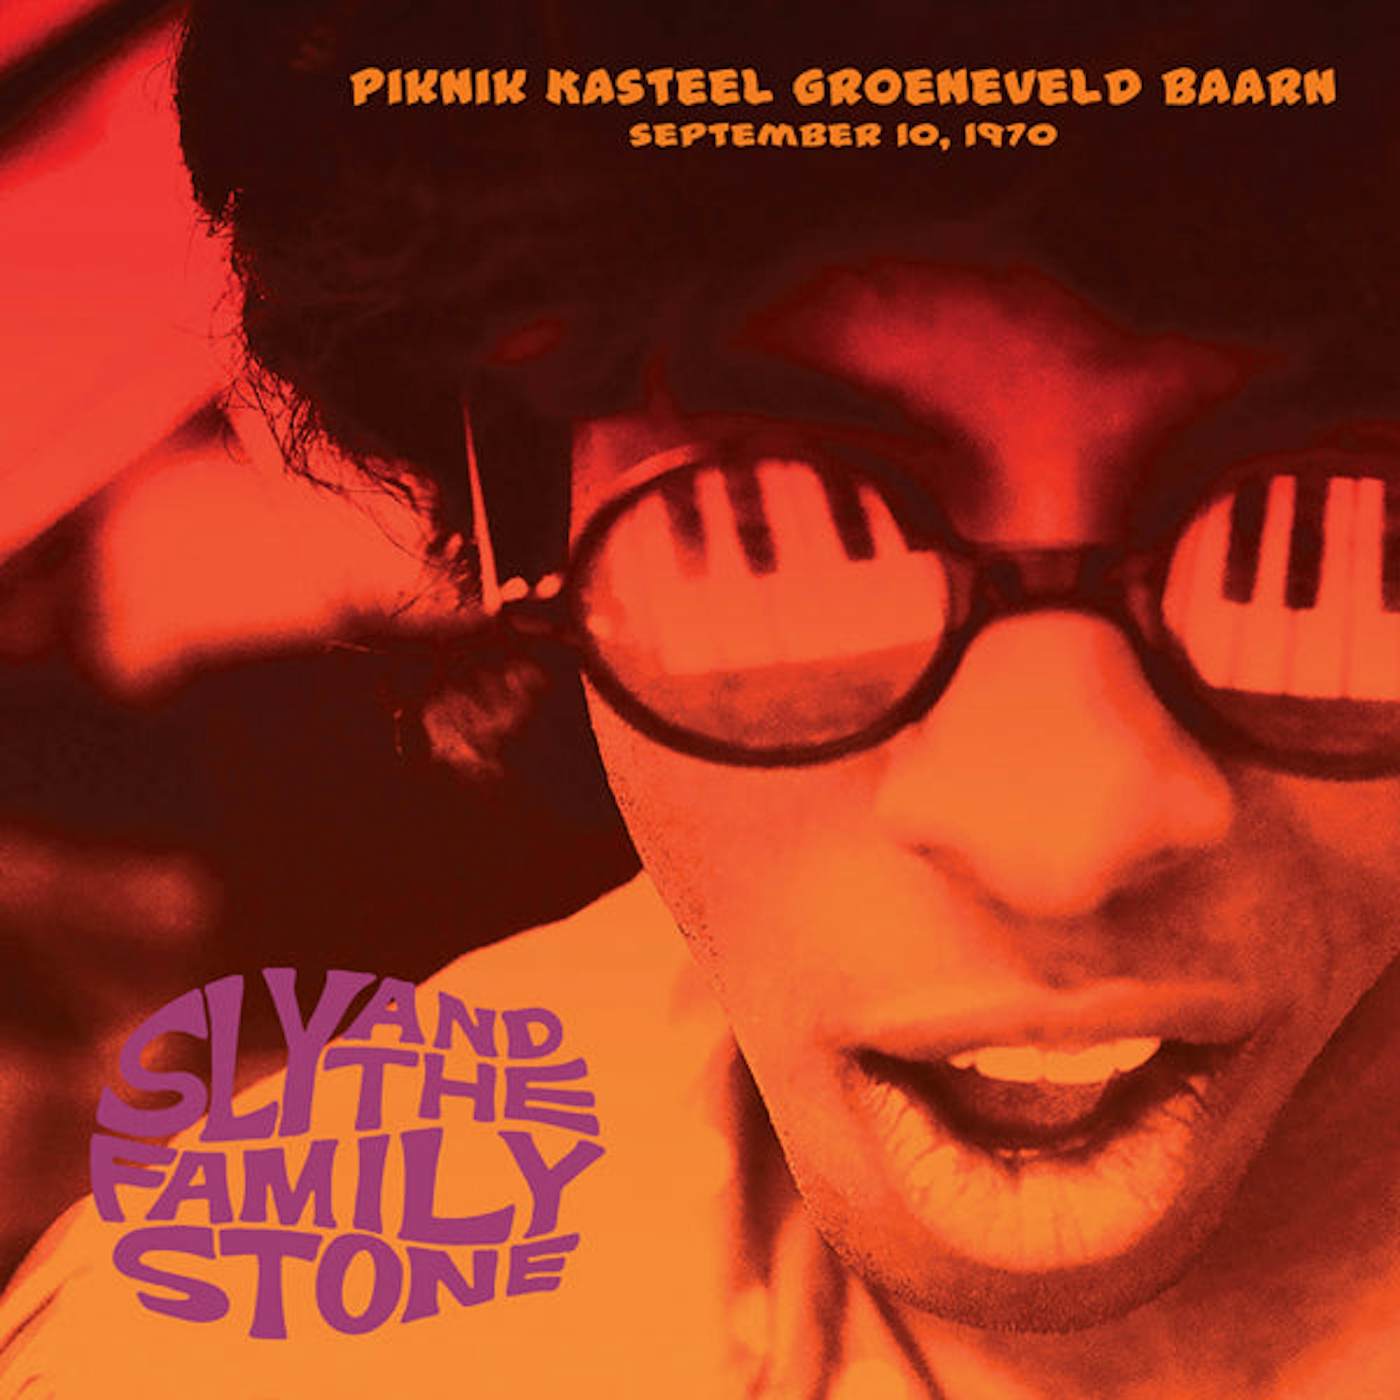 Sly & The Family Stone LP - Piknik Kasteel Groeneveld Baarn - September, 10 1970 (Vinyl)